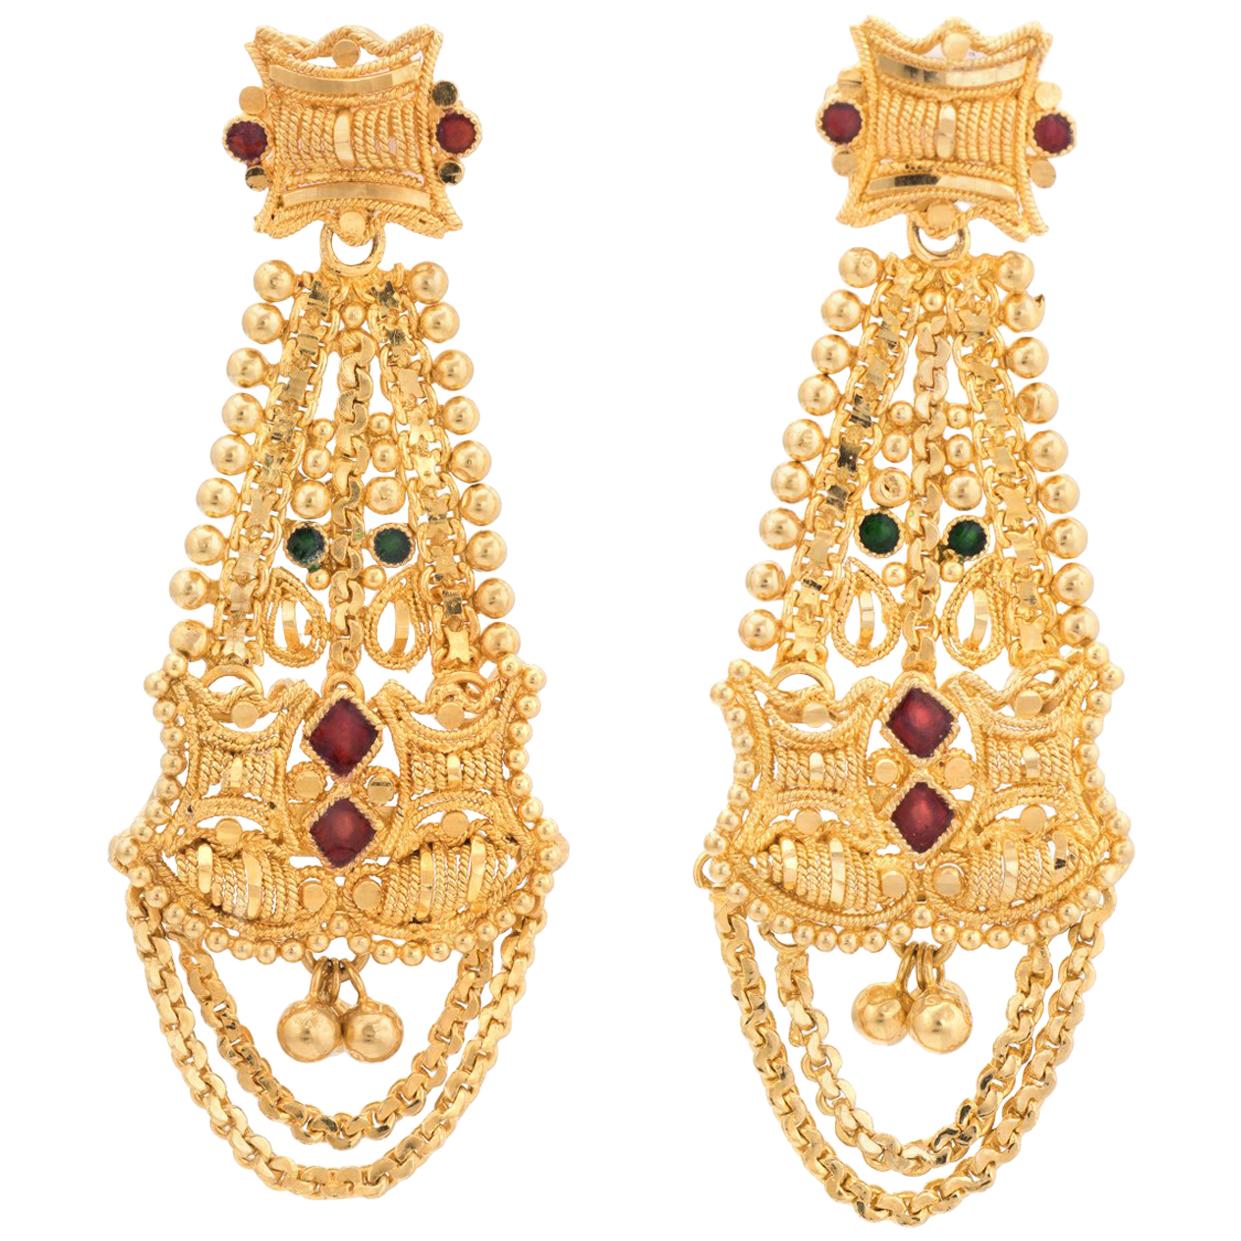 Vintage Enamel Earrings 22 Karat Gold High Karat Dangle Drop Ornate Textured